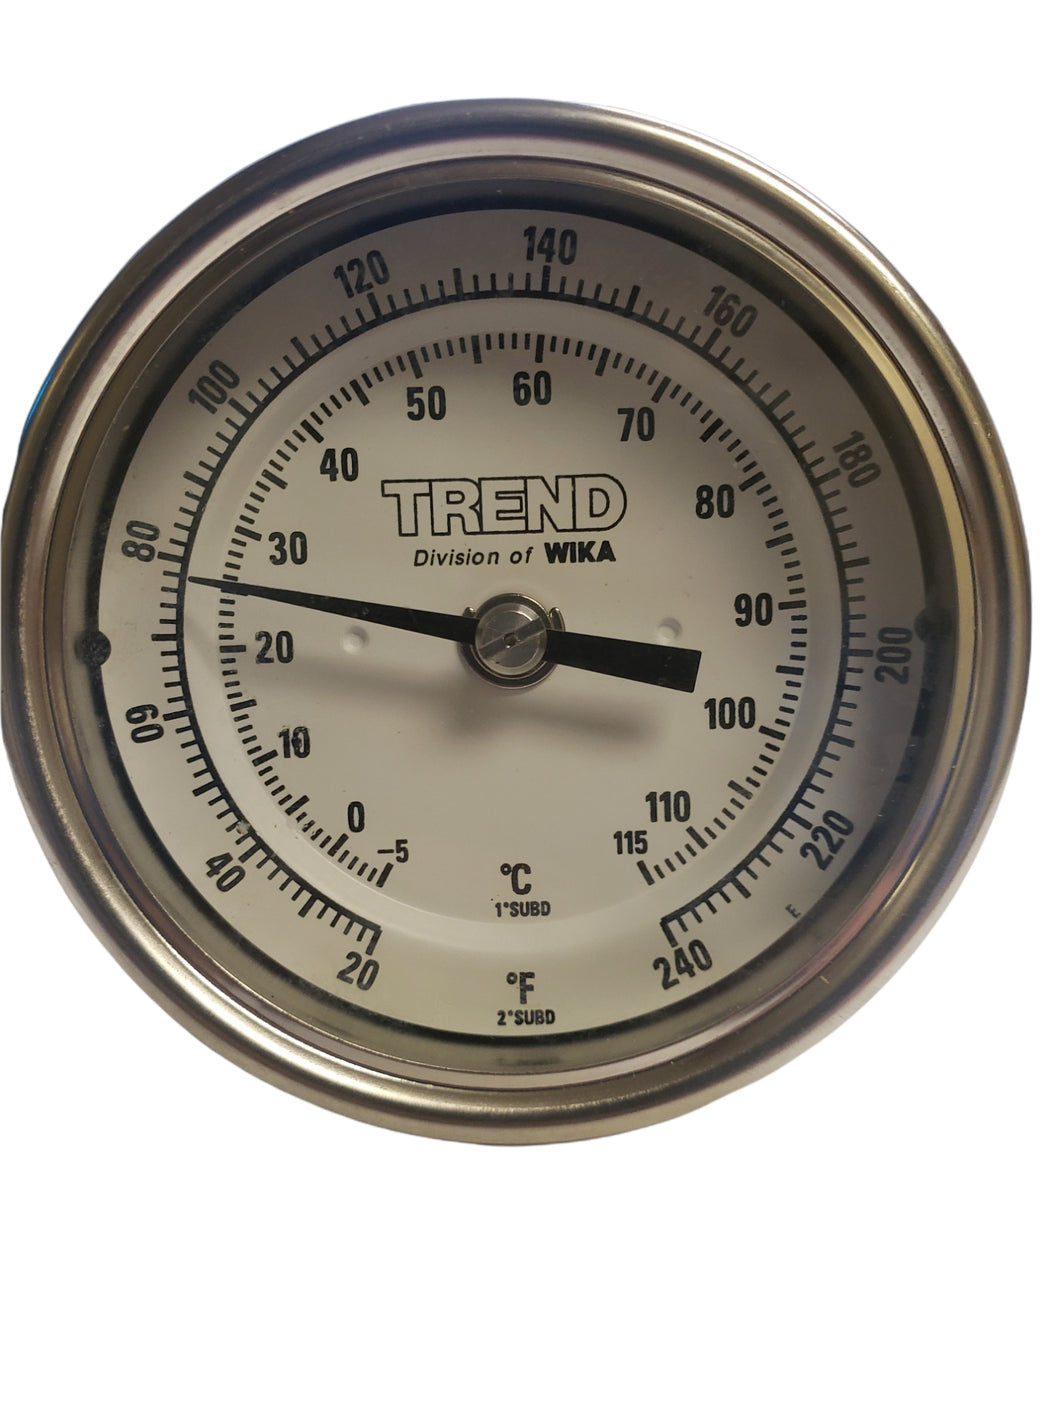 Trend Bi-Metal Dial Thermometer Part #52040A002G4 - FreemanLiquidators - [product_description]